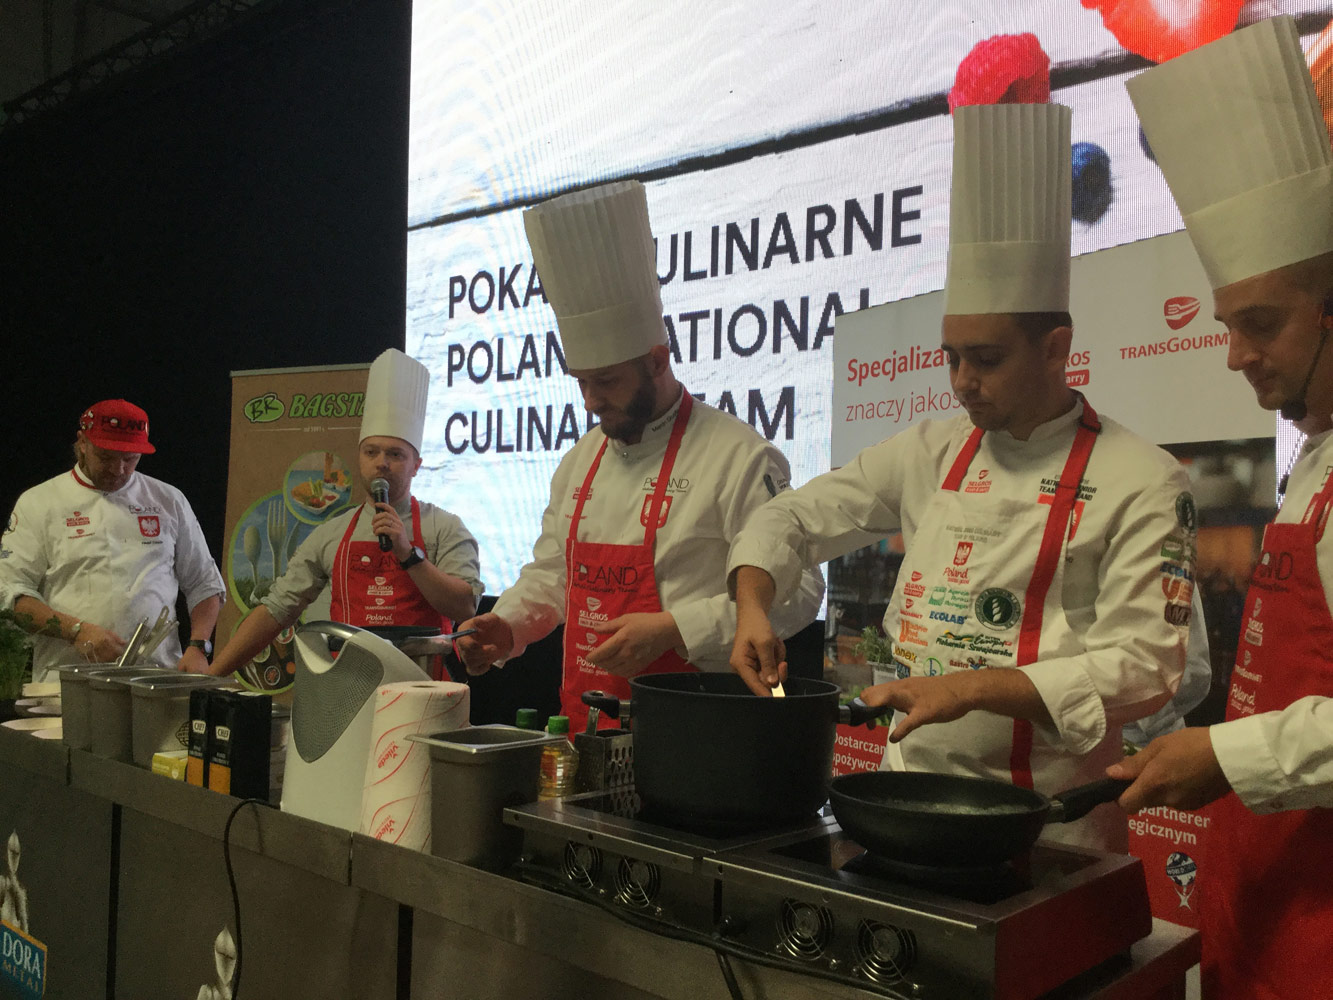 Warsaw Food Expo 2019